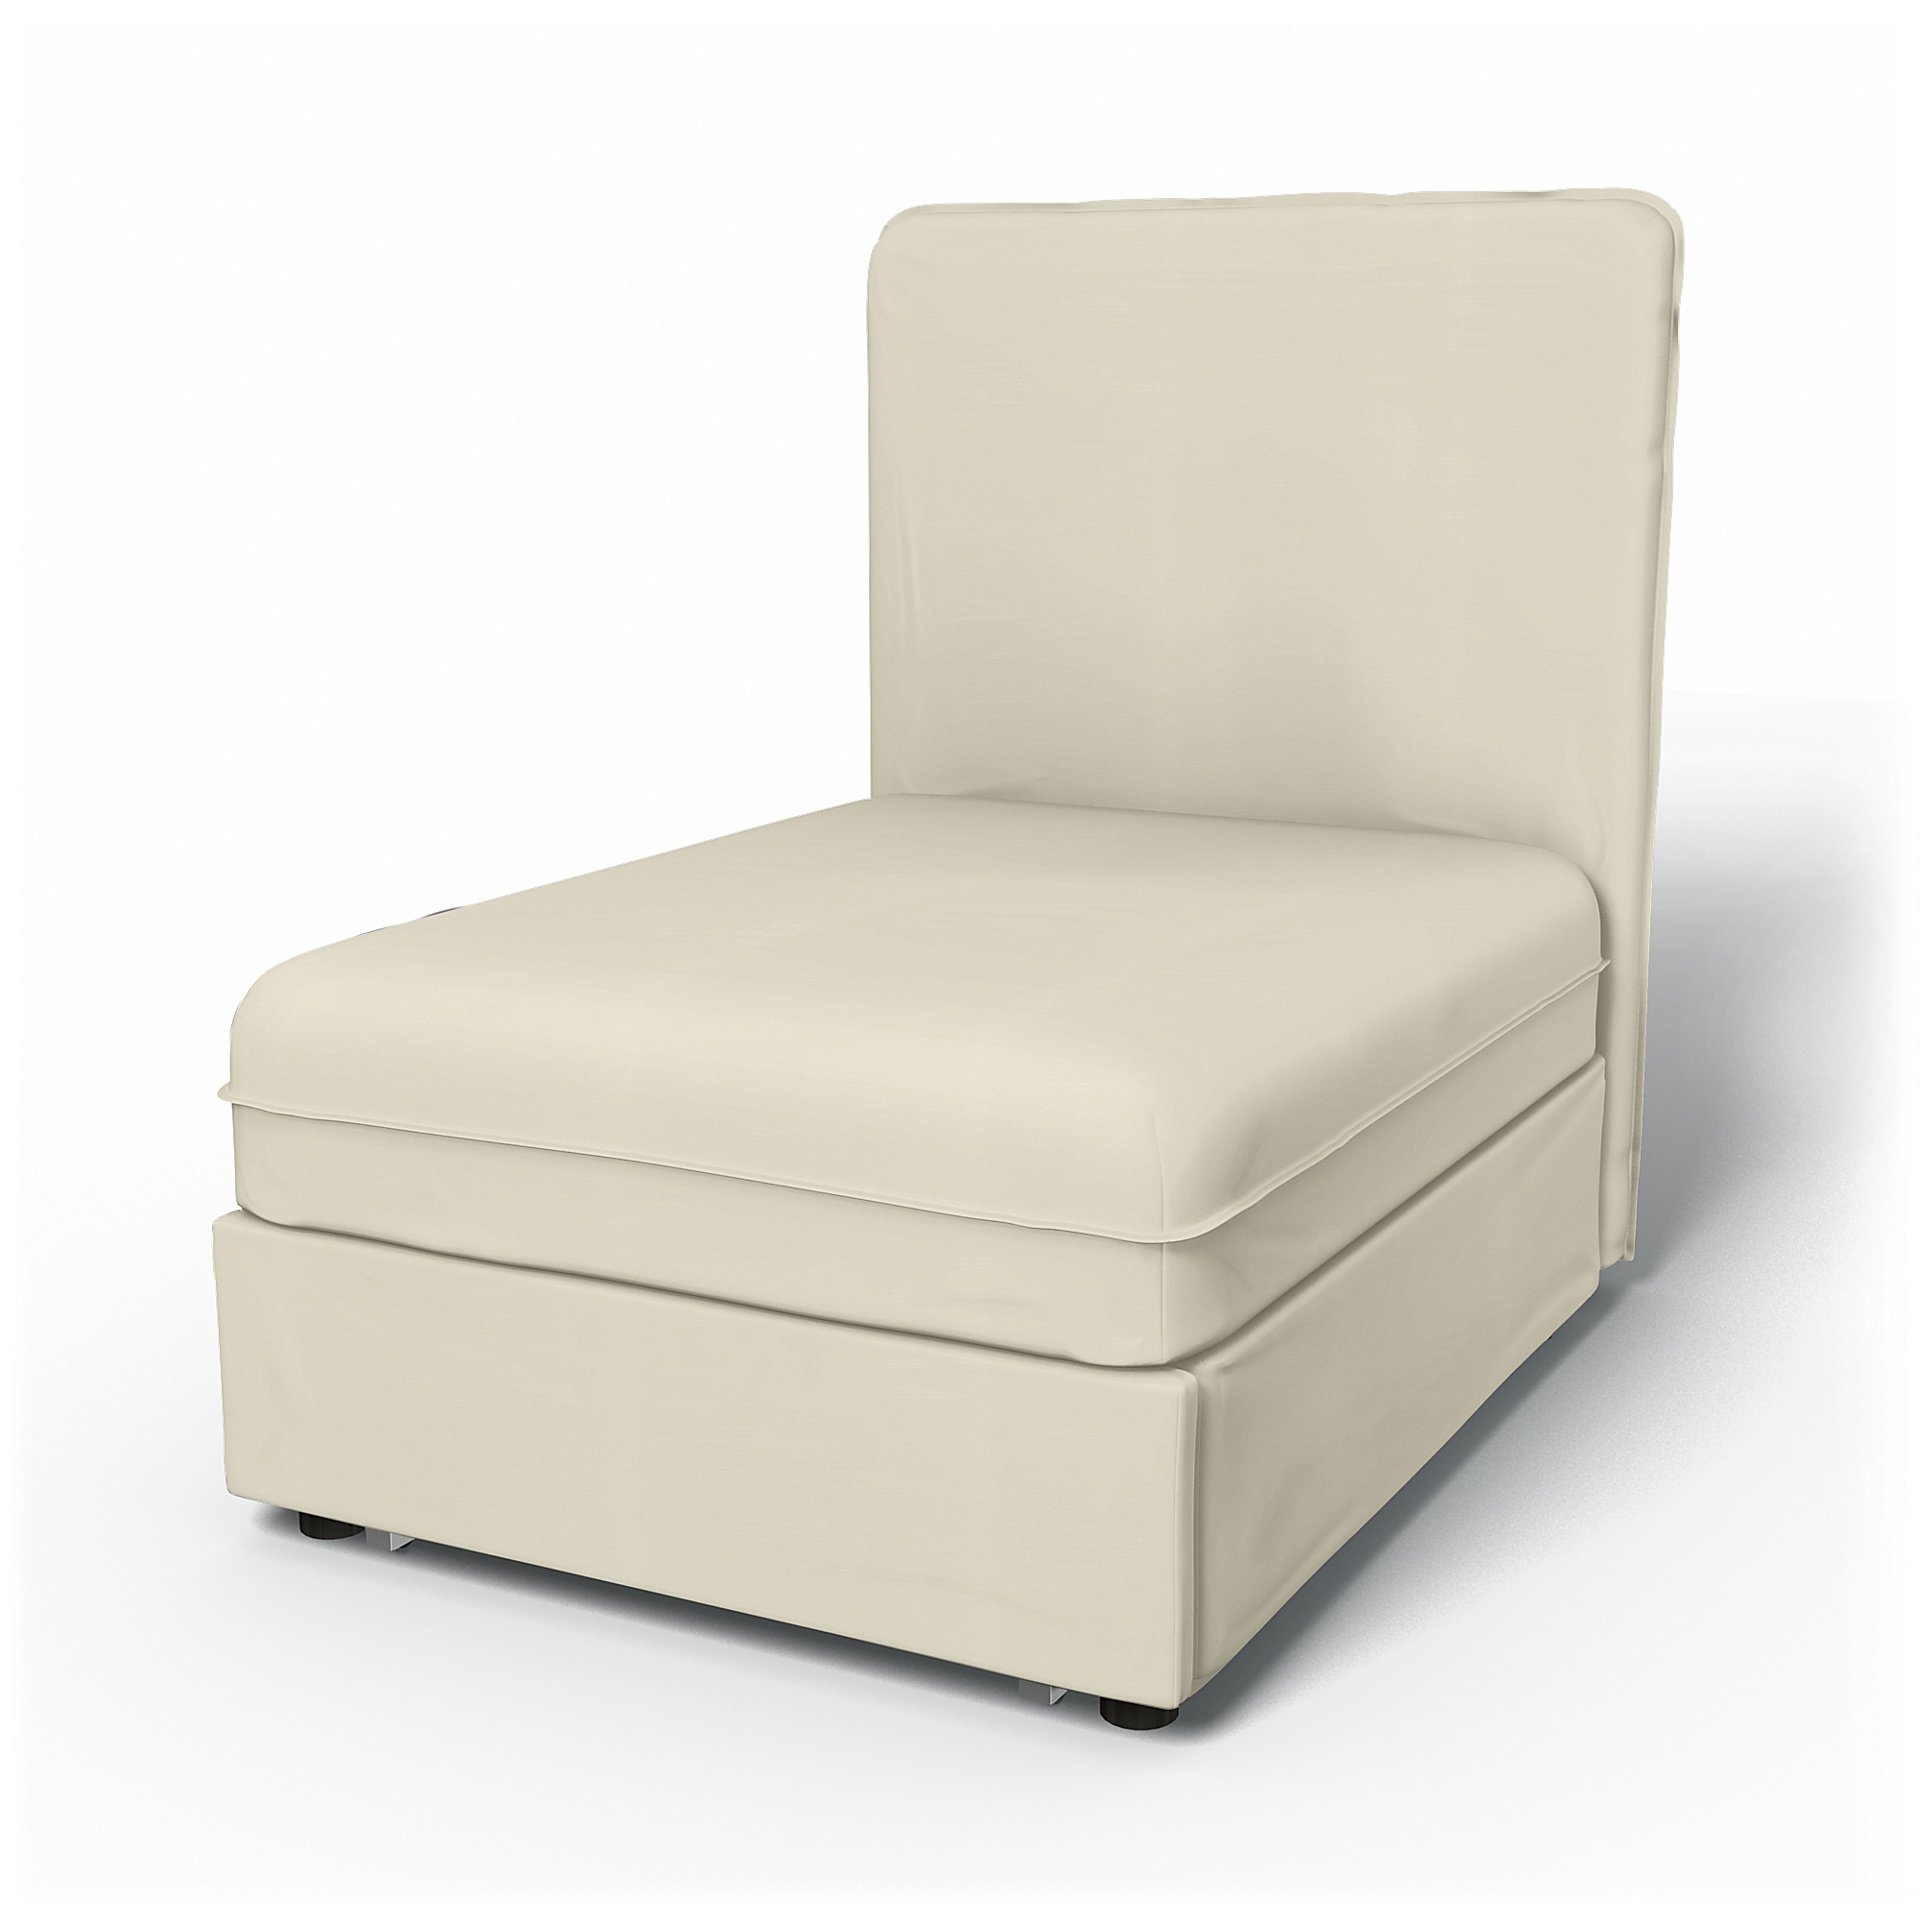 IKEA - Vallentuna Seat Module with High Back Sofa Bed Cover (80x100x46cm), Tofu, Cotton - Bemz